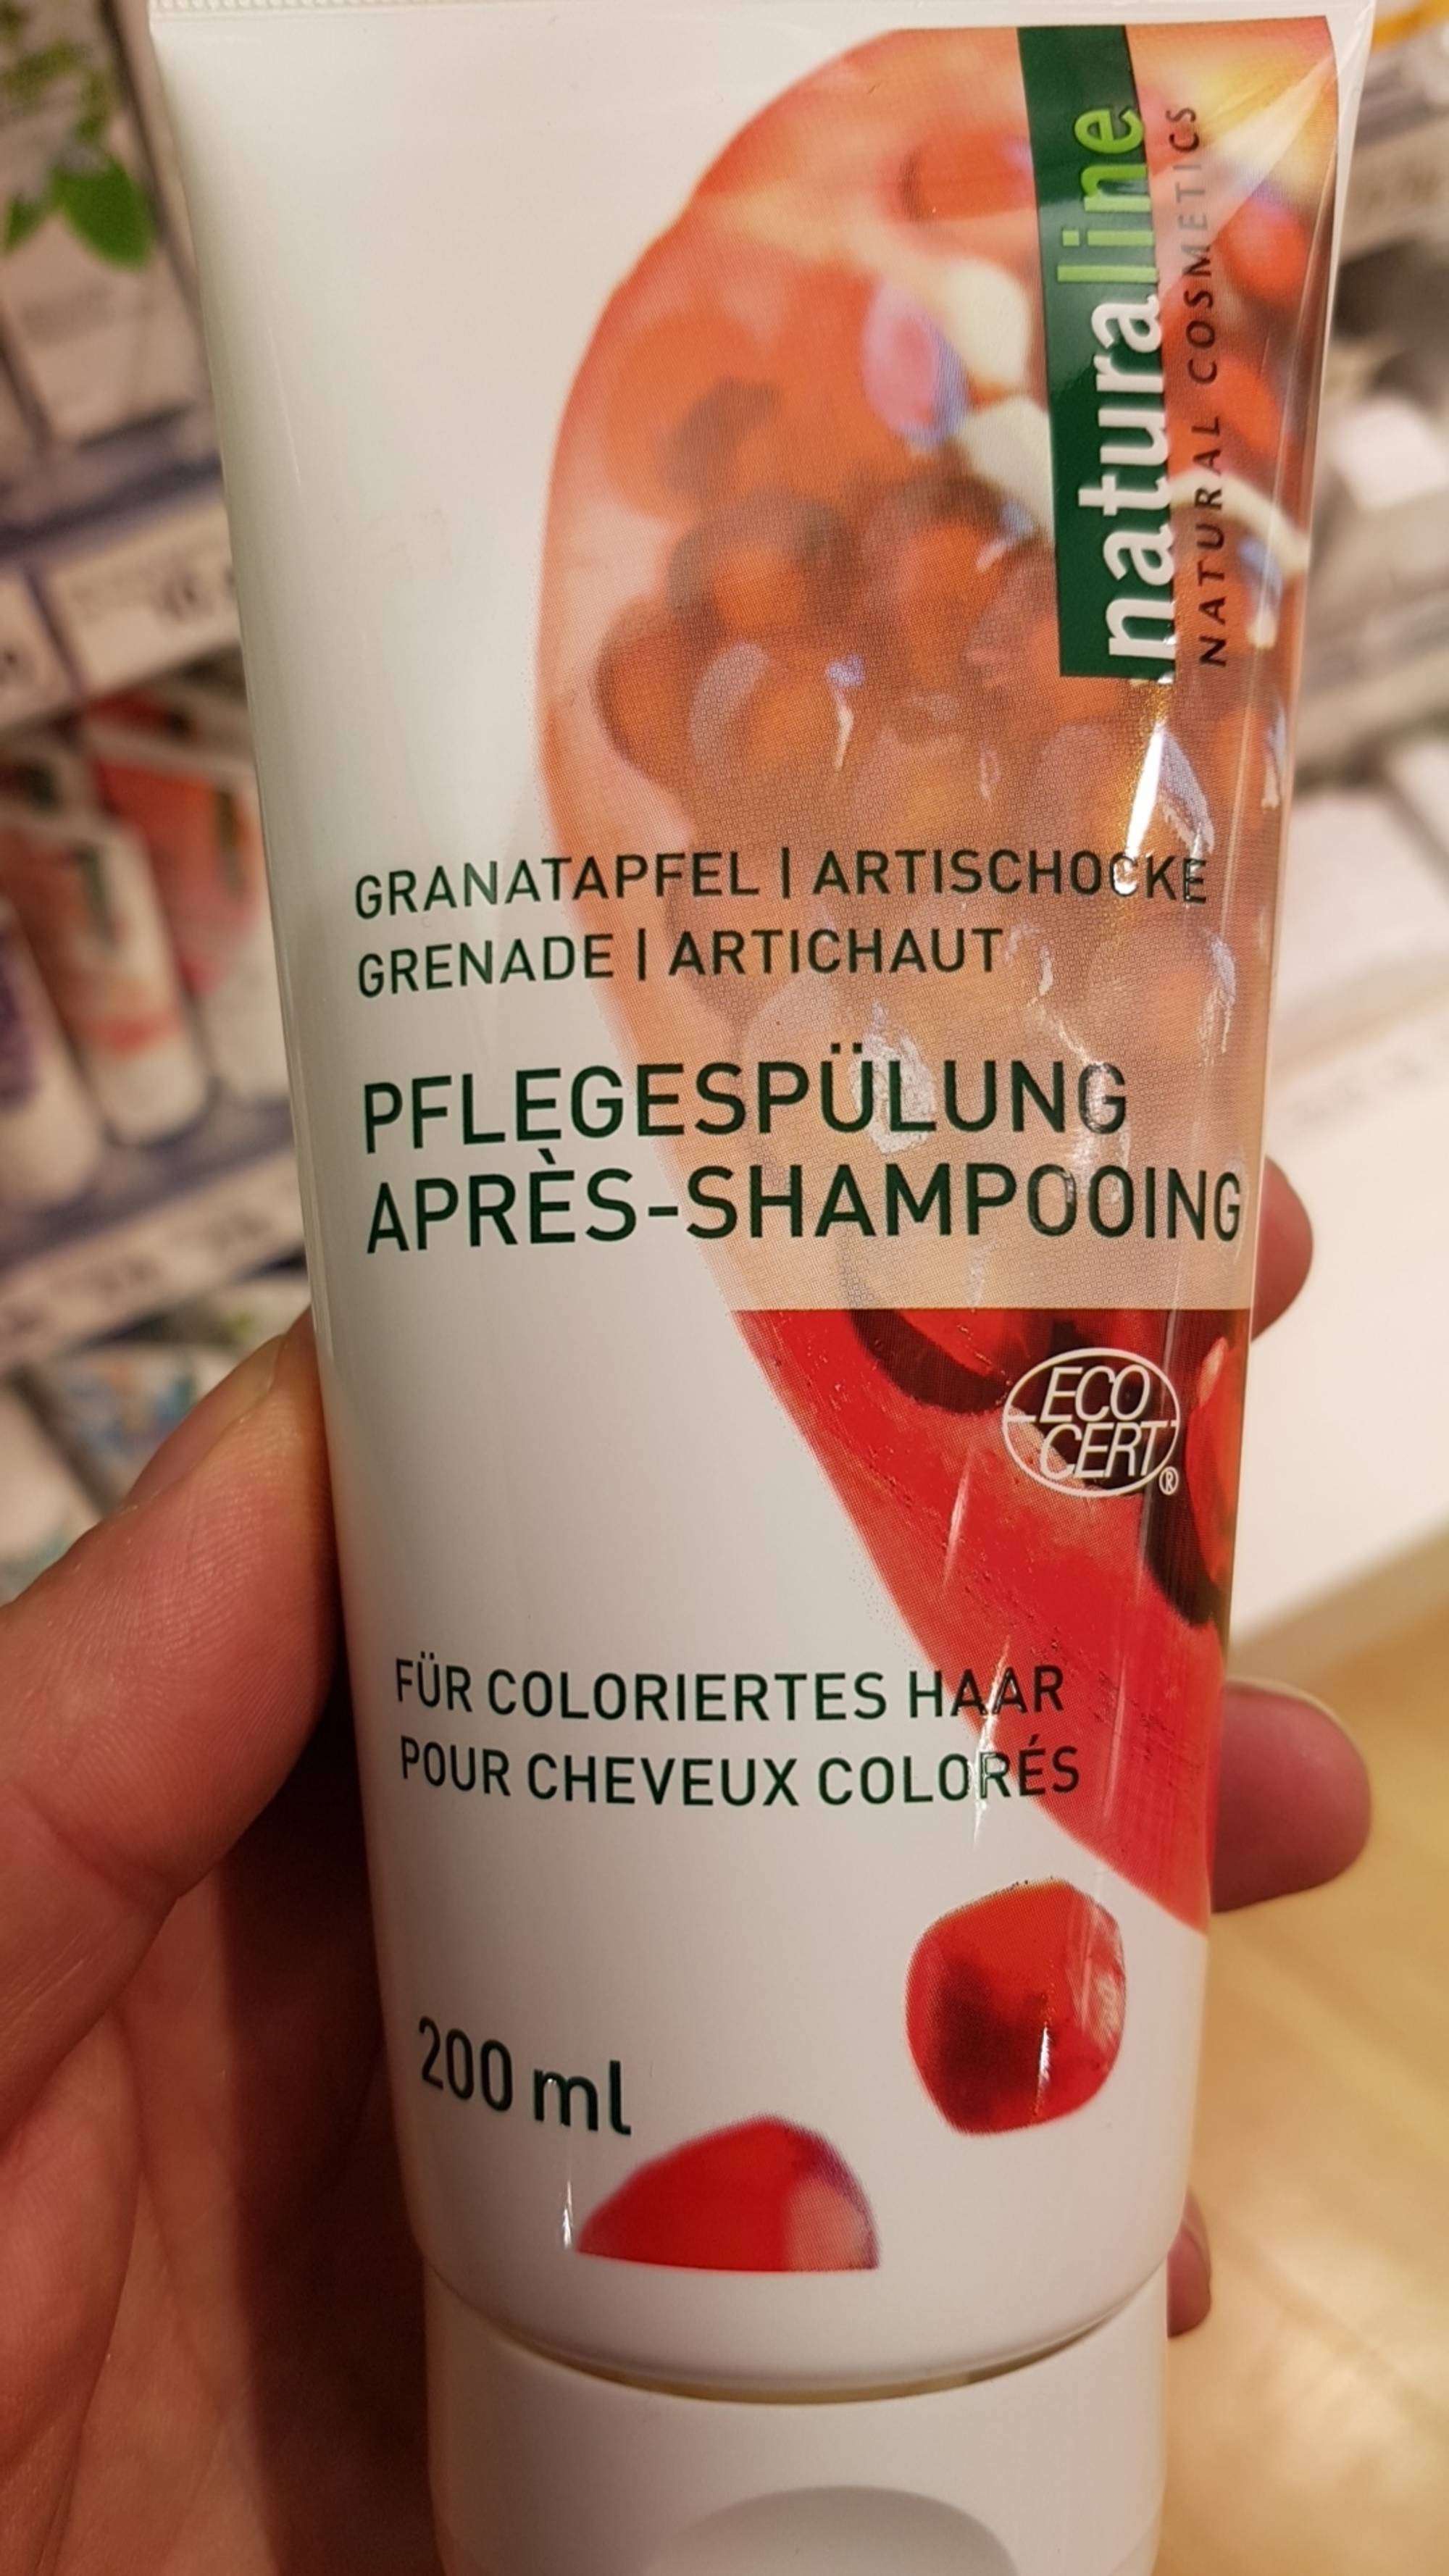 NATURALINE - Grenade artichaut - Après-shampooing